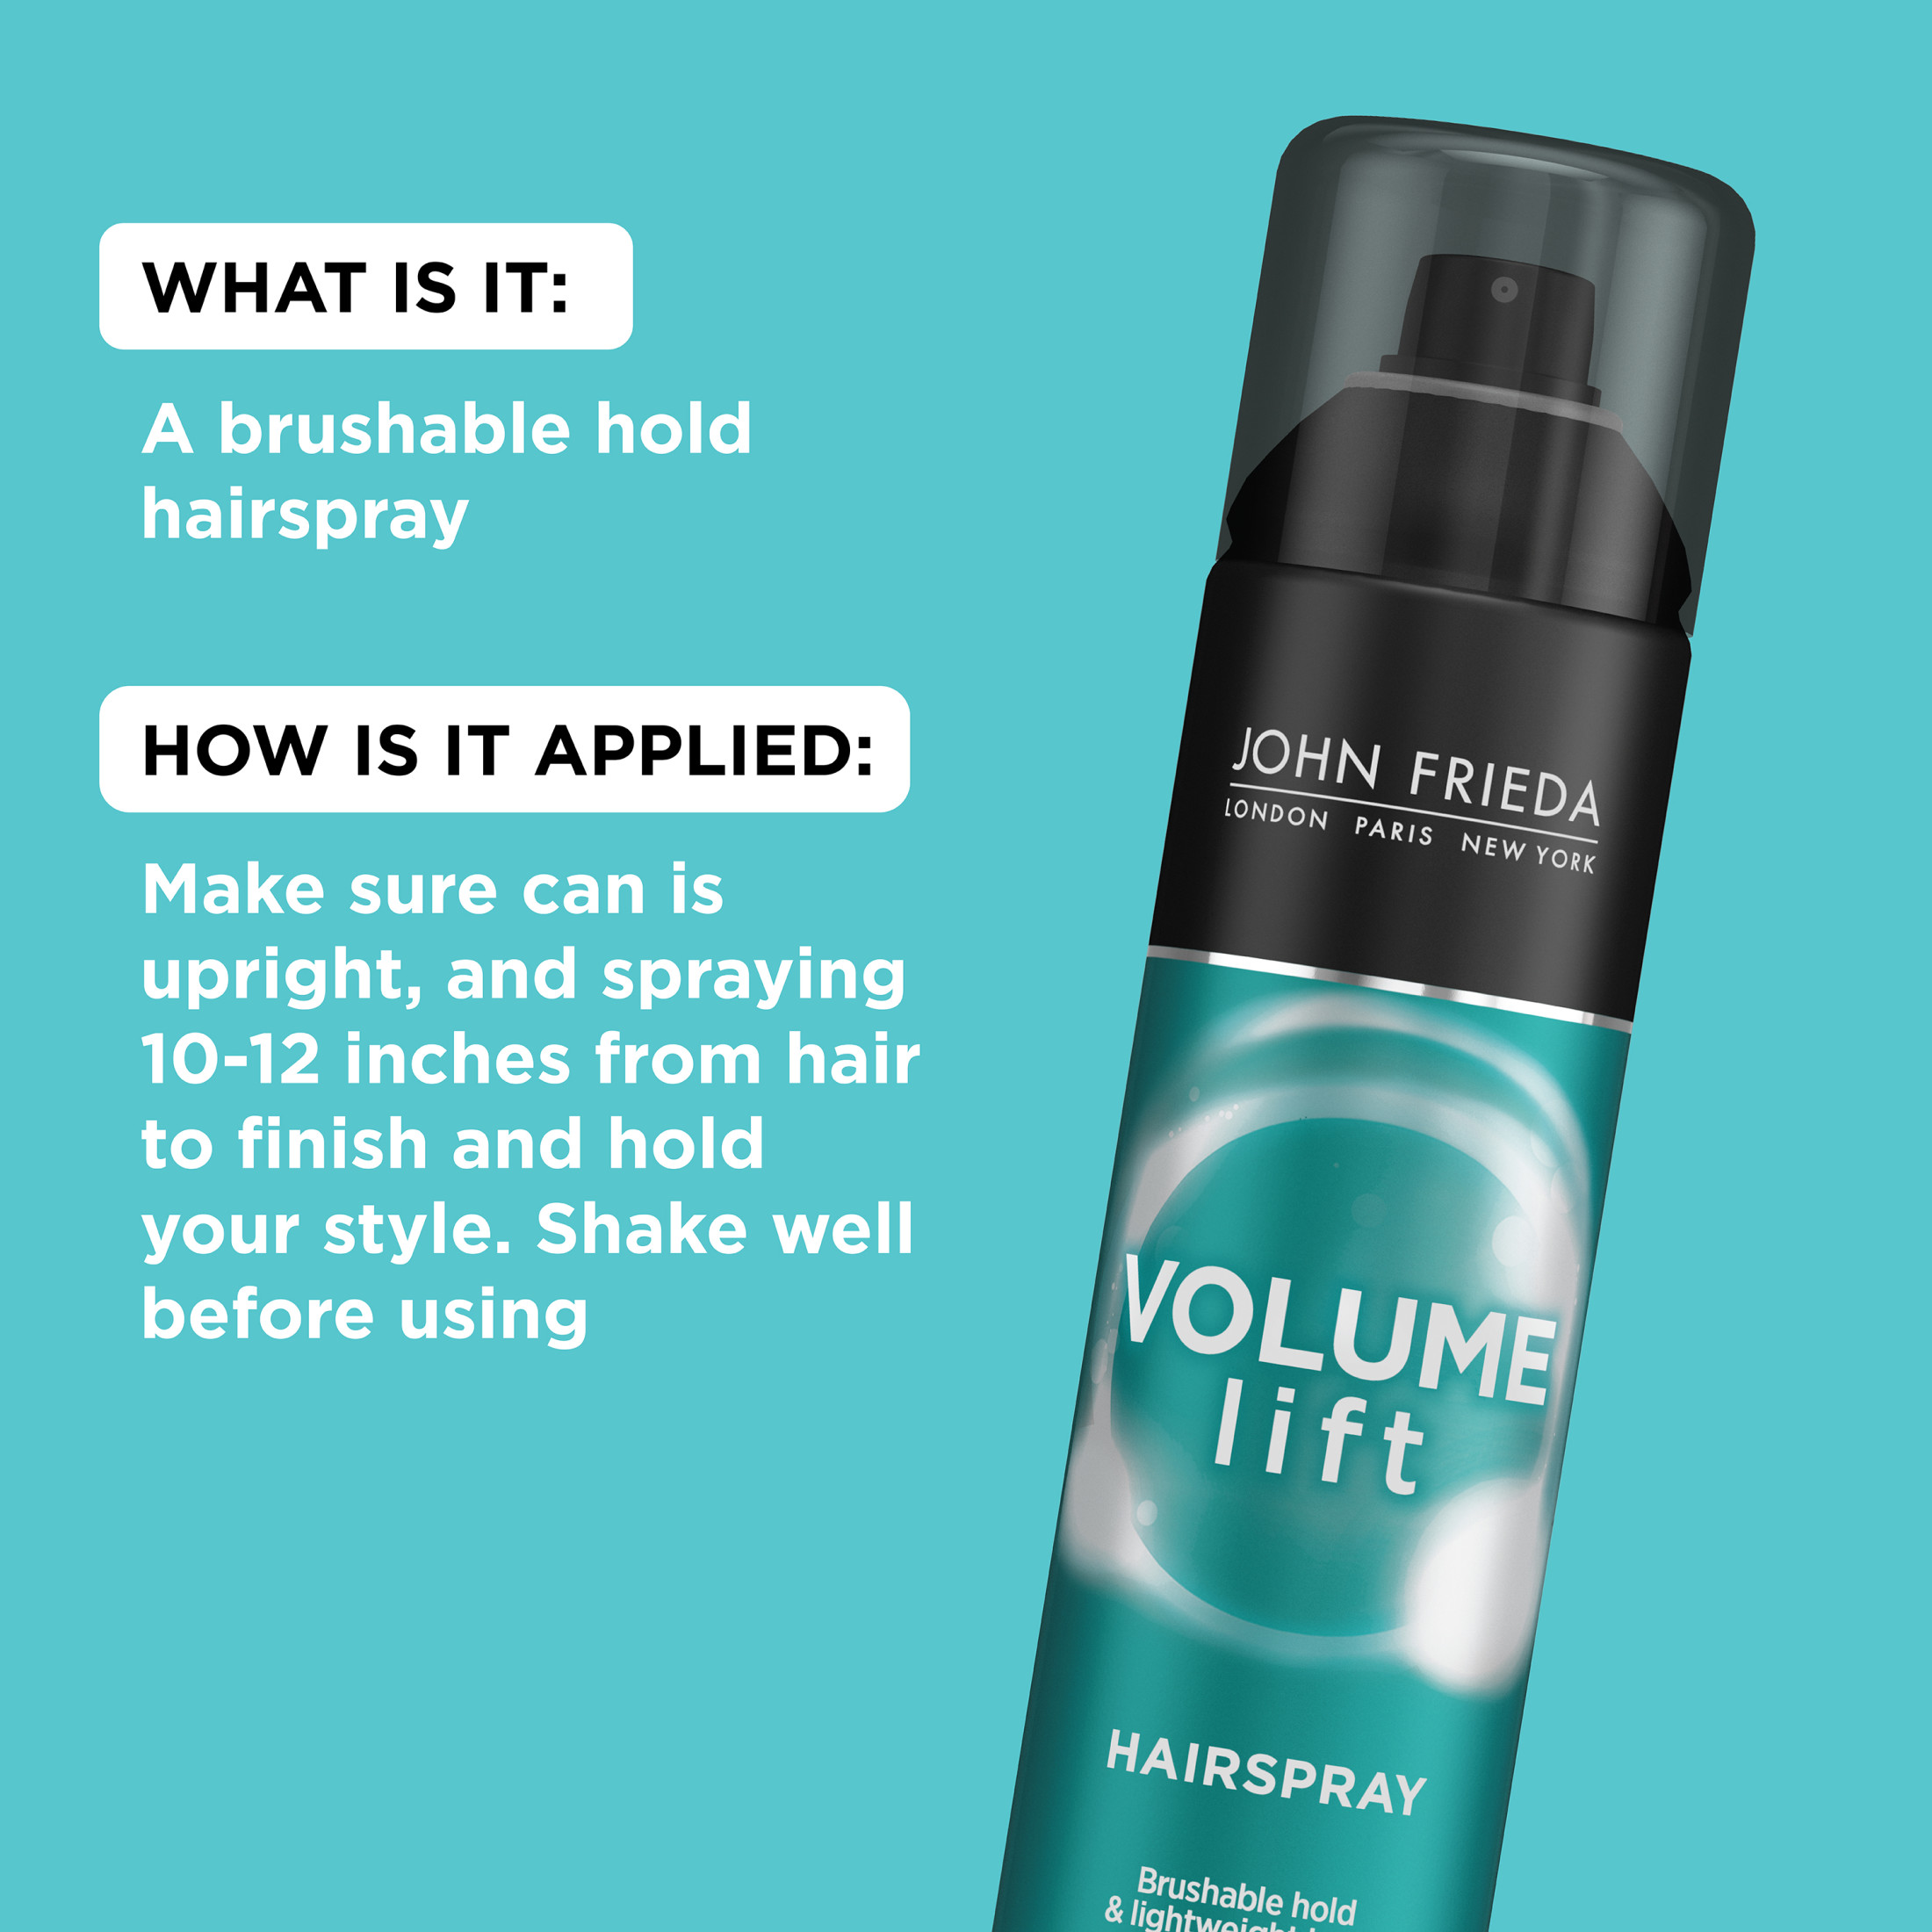 John Frieda Volume Lift Volumizing Hairspray for Fine or Flat Hair, 10 fl oz - image 3 of 4